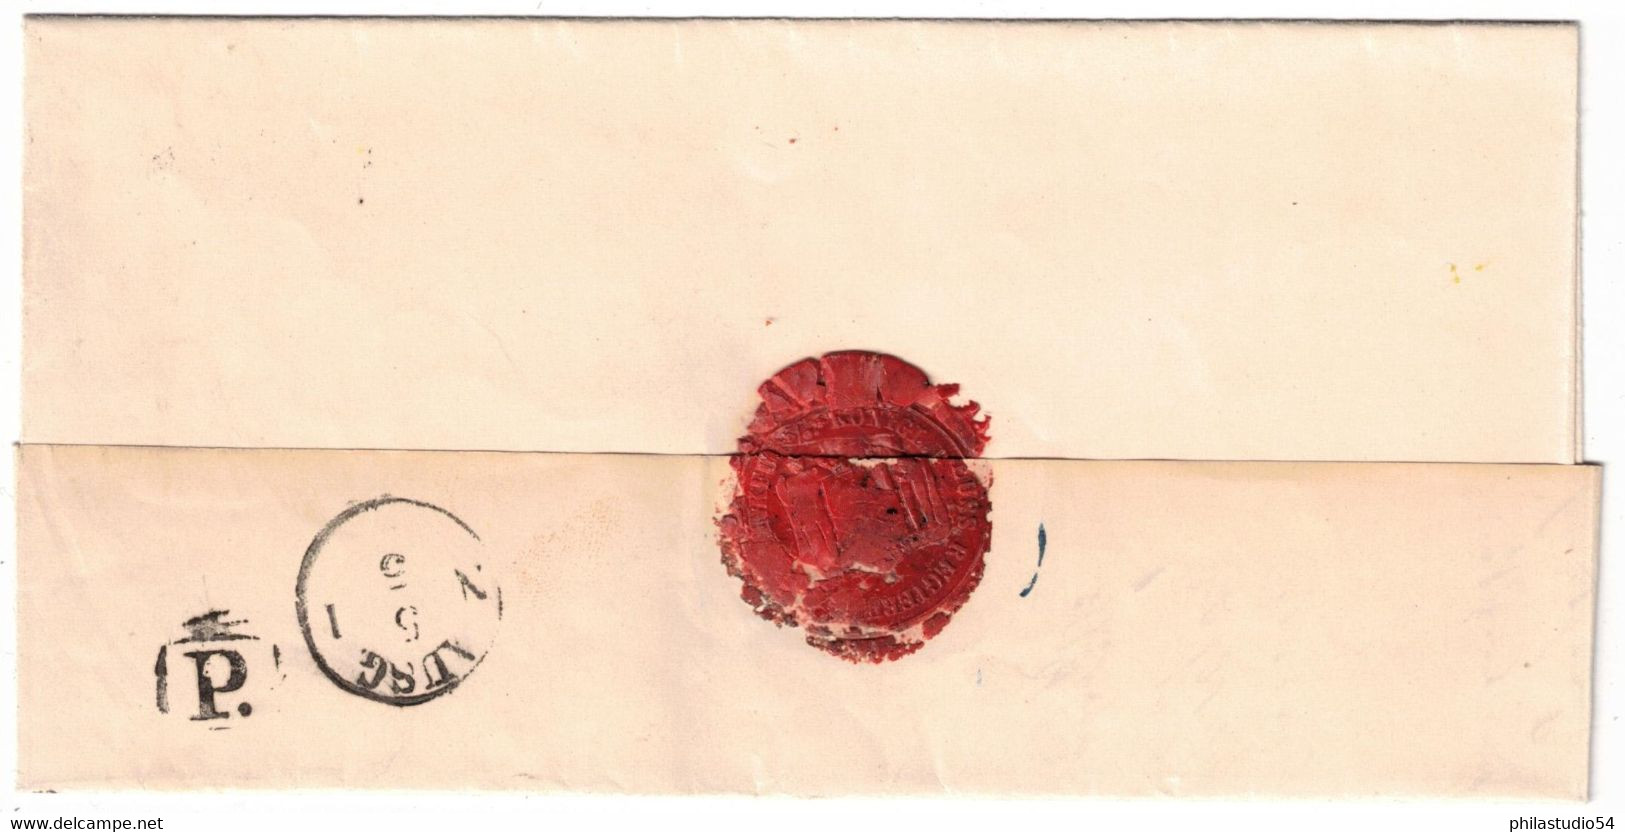 1869 Paketbegleitung Ab FRAJFURT A. O. - Lettres & Documents